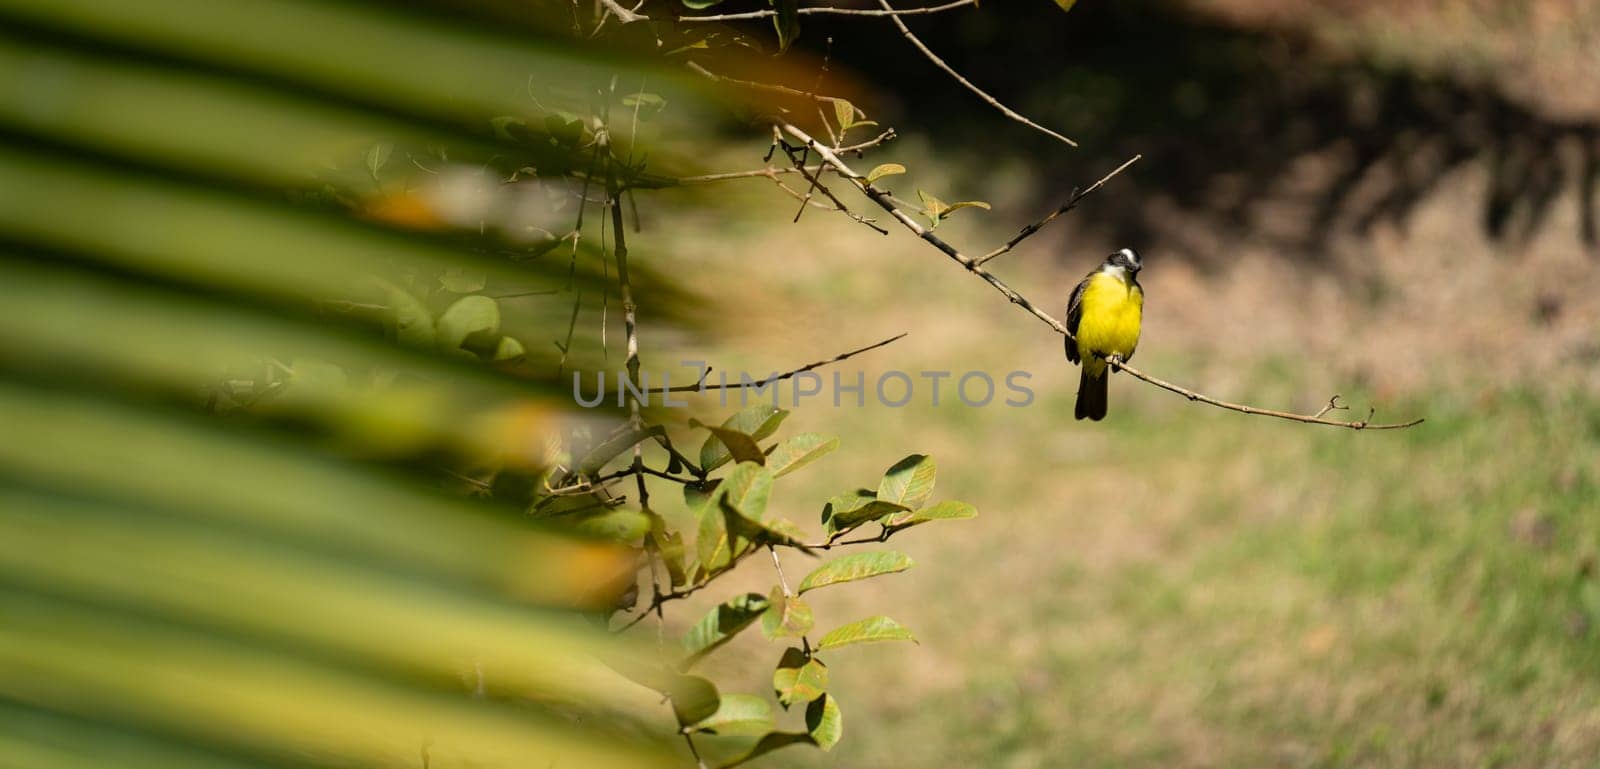 Great Kiskadee Perched on a Branch in Natural Habitat by FerradalFCG